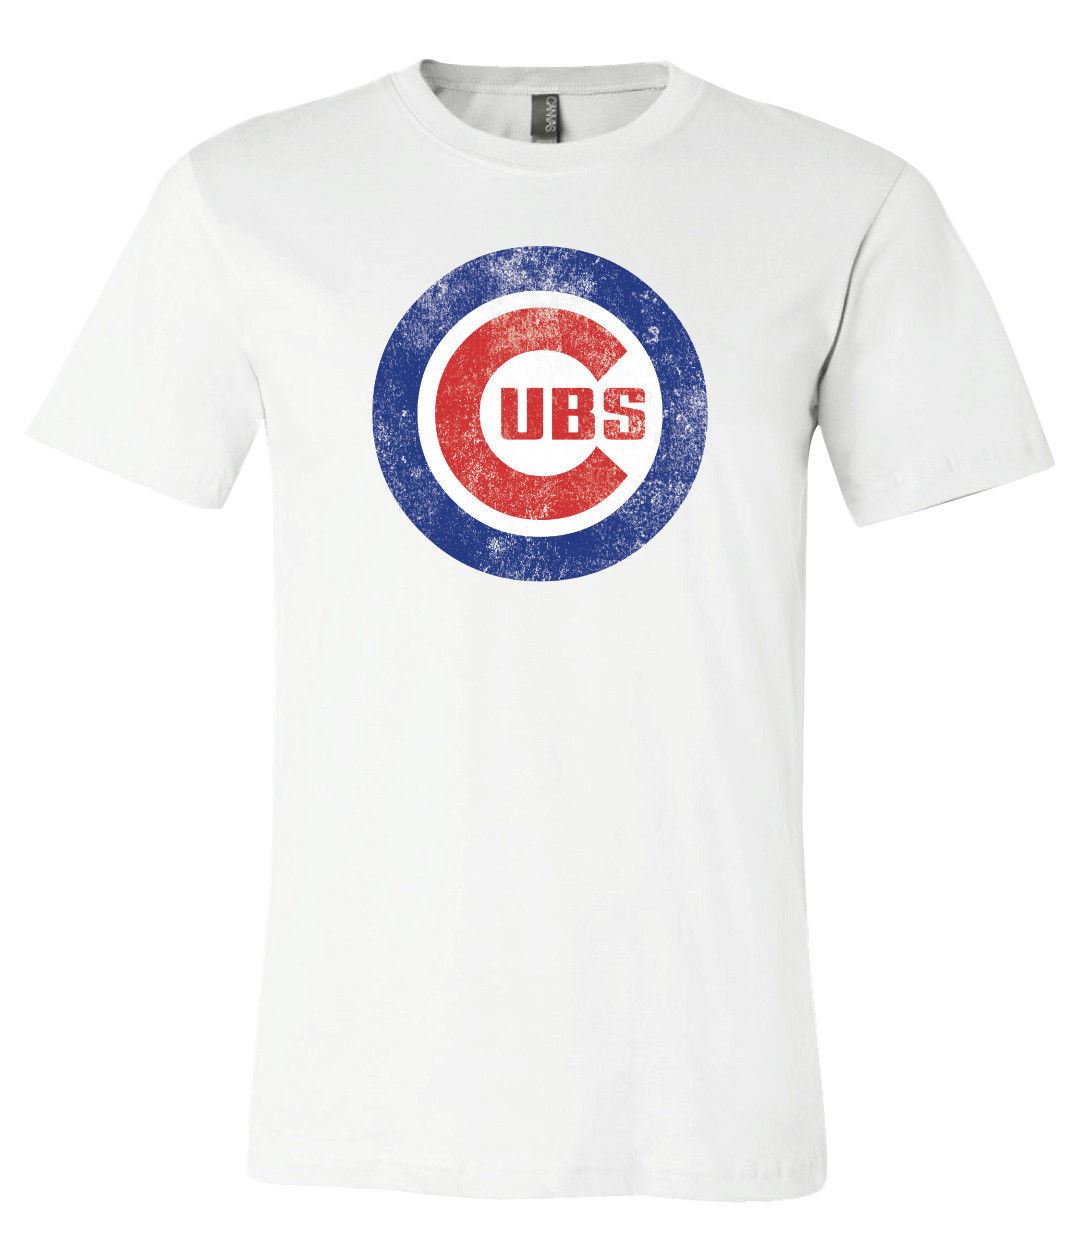 Vintage Chicago Cubs T-Shirt